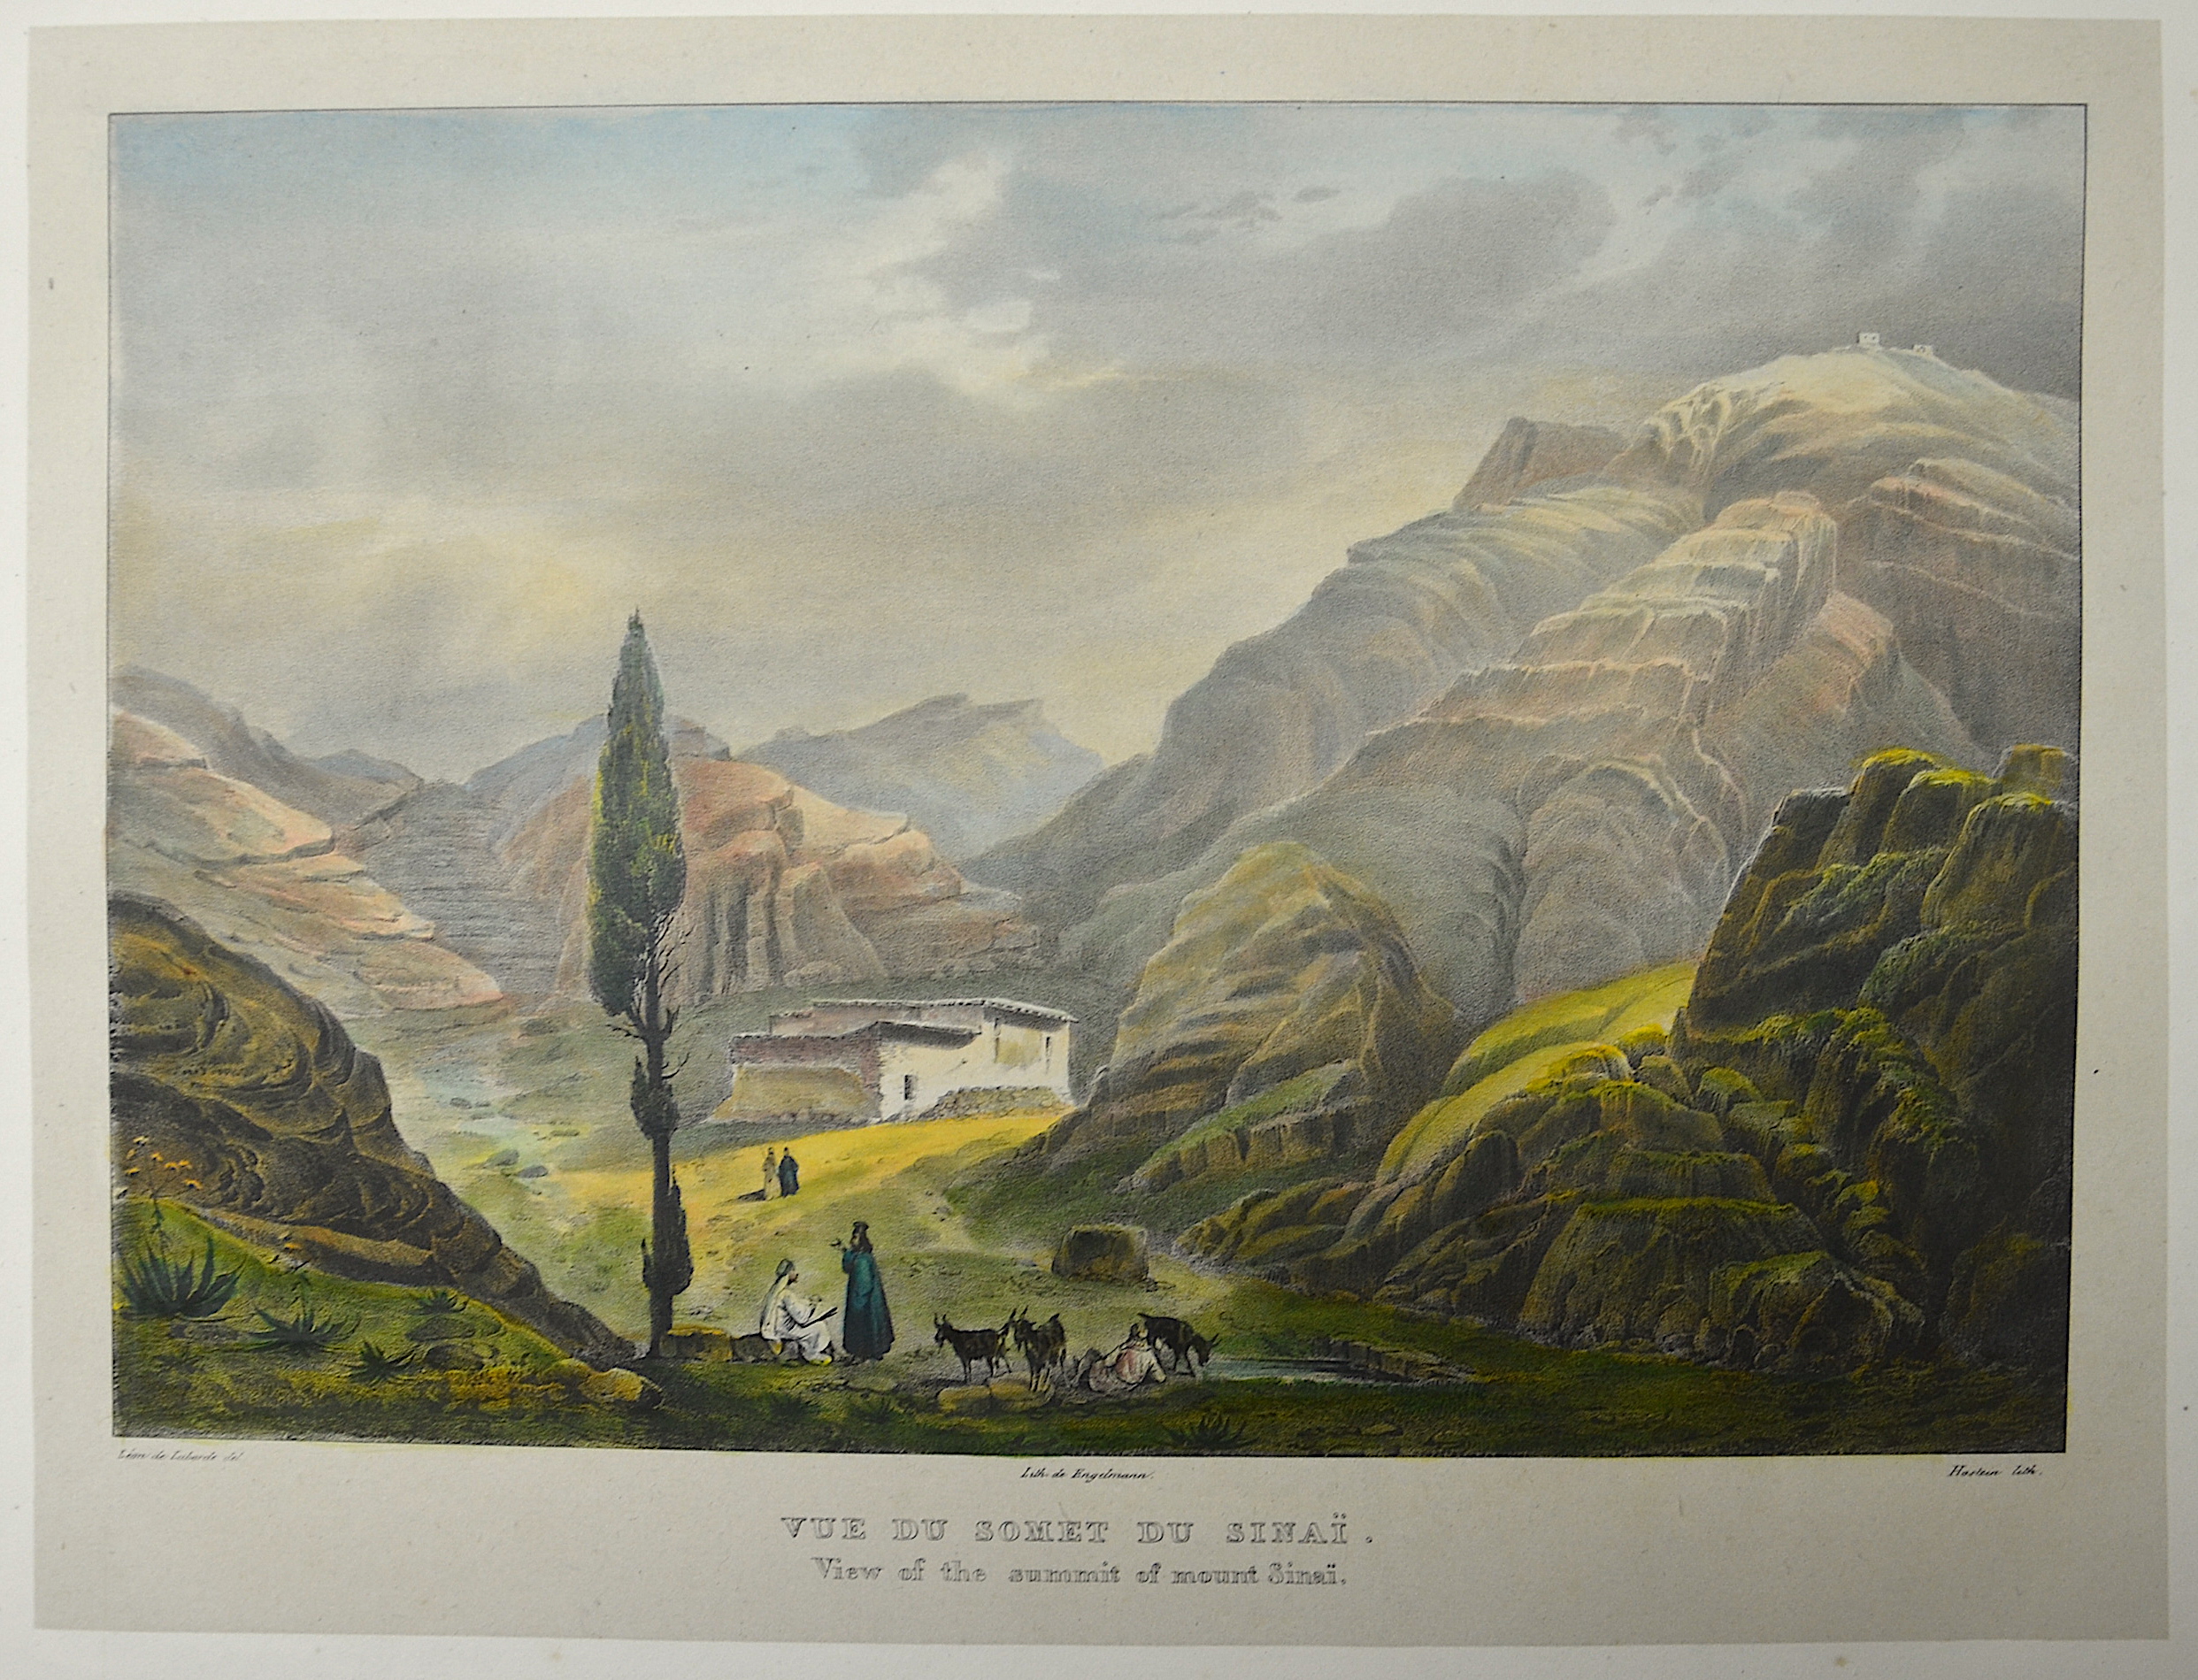 Engelmann  Vue du Somet du Sinai/ View of the Summet of mount Sinai